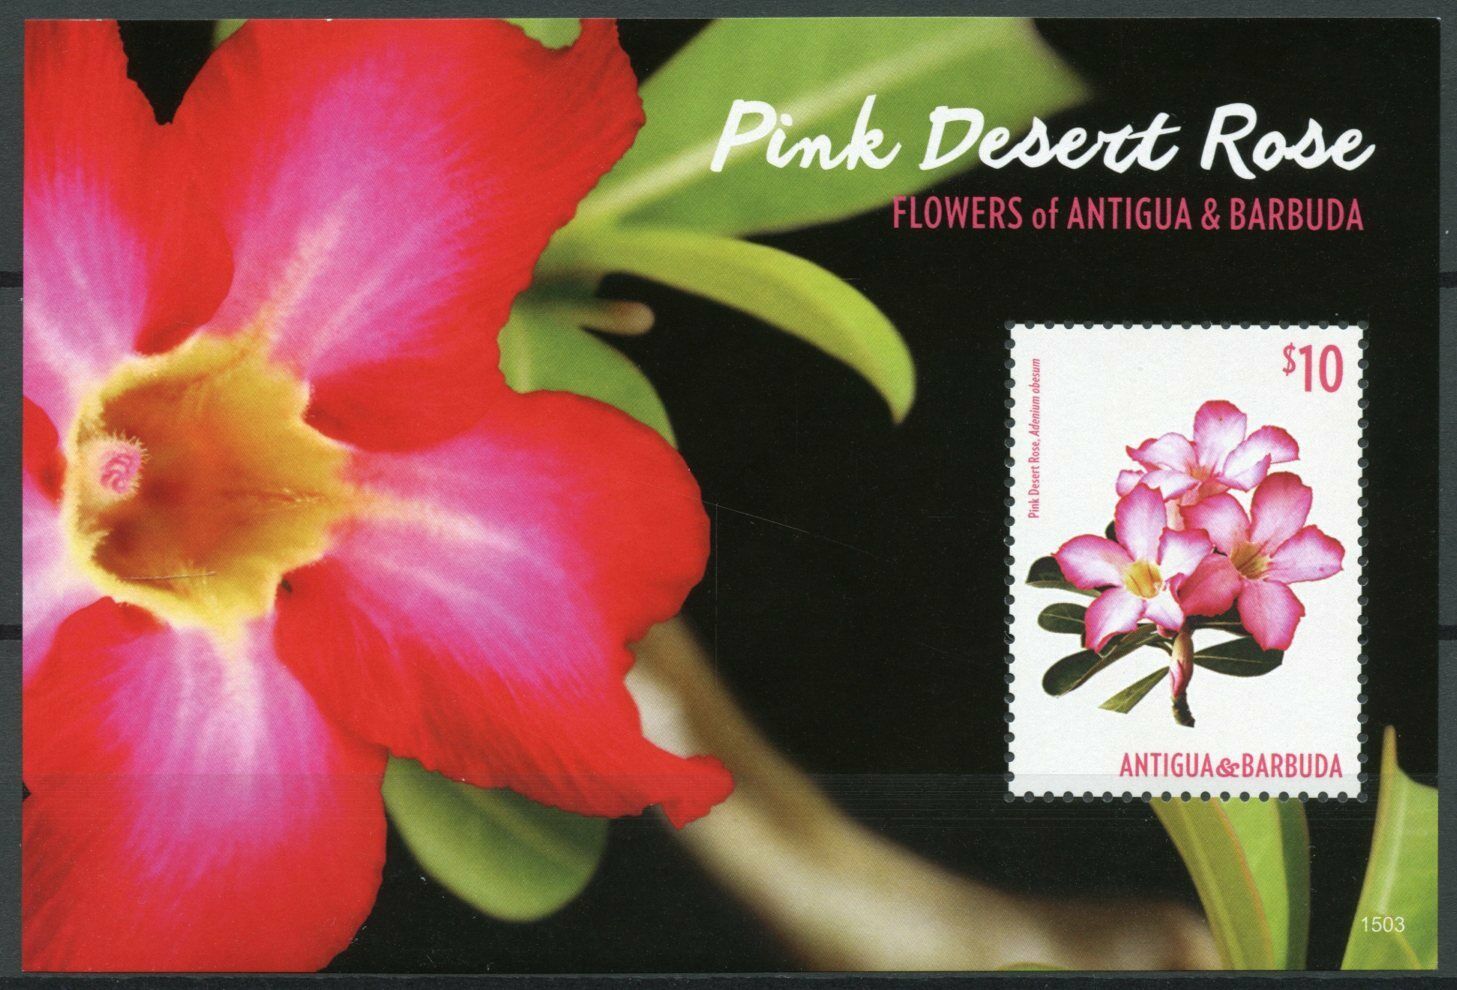 Antigua & Barbuda Flowers Stamps 2015 MNH Pink Desert Rose Roses Flora 1v S/S